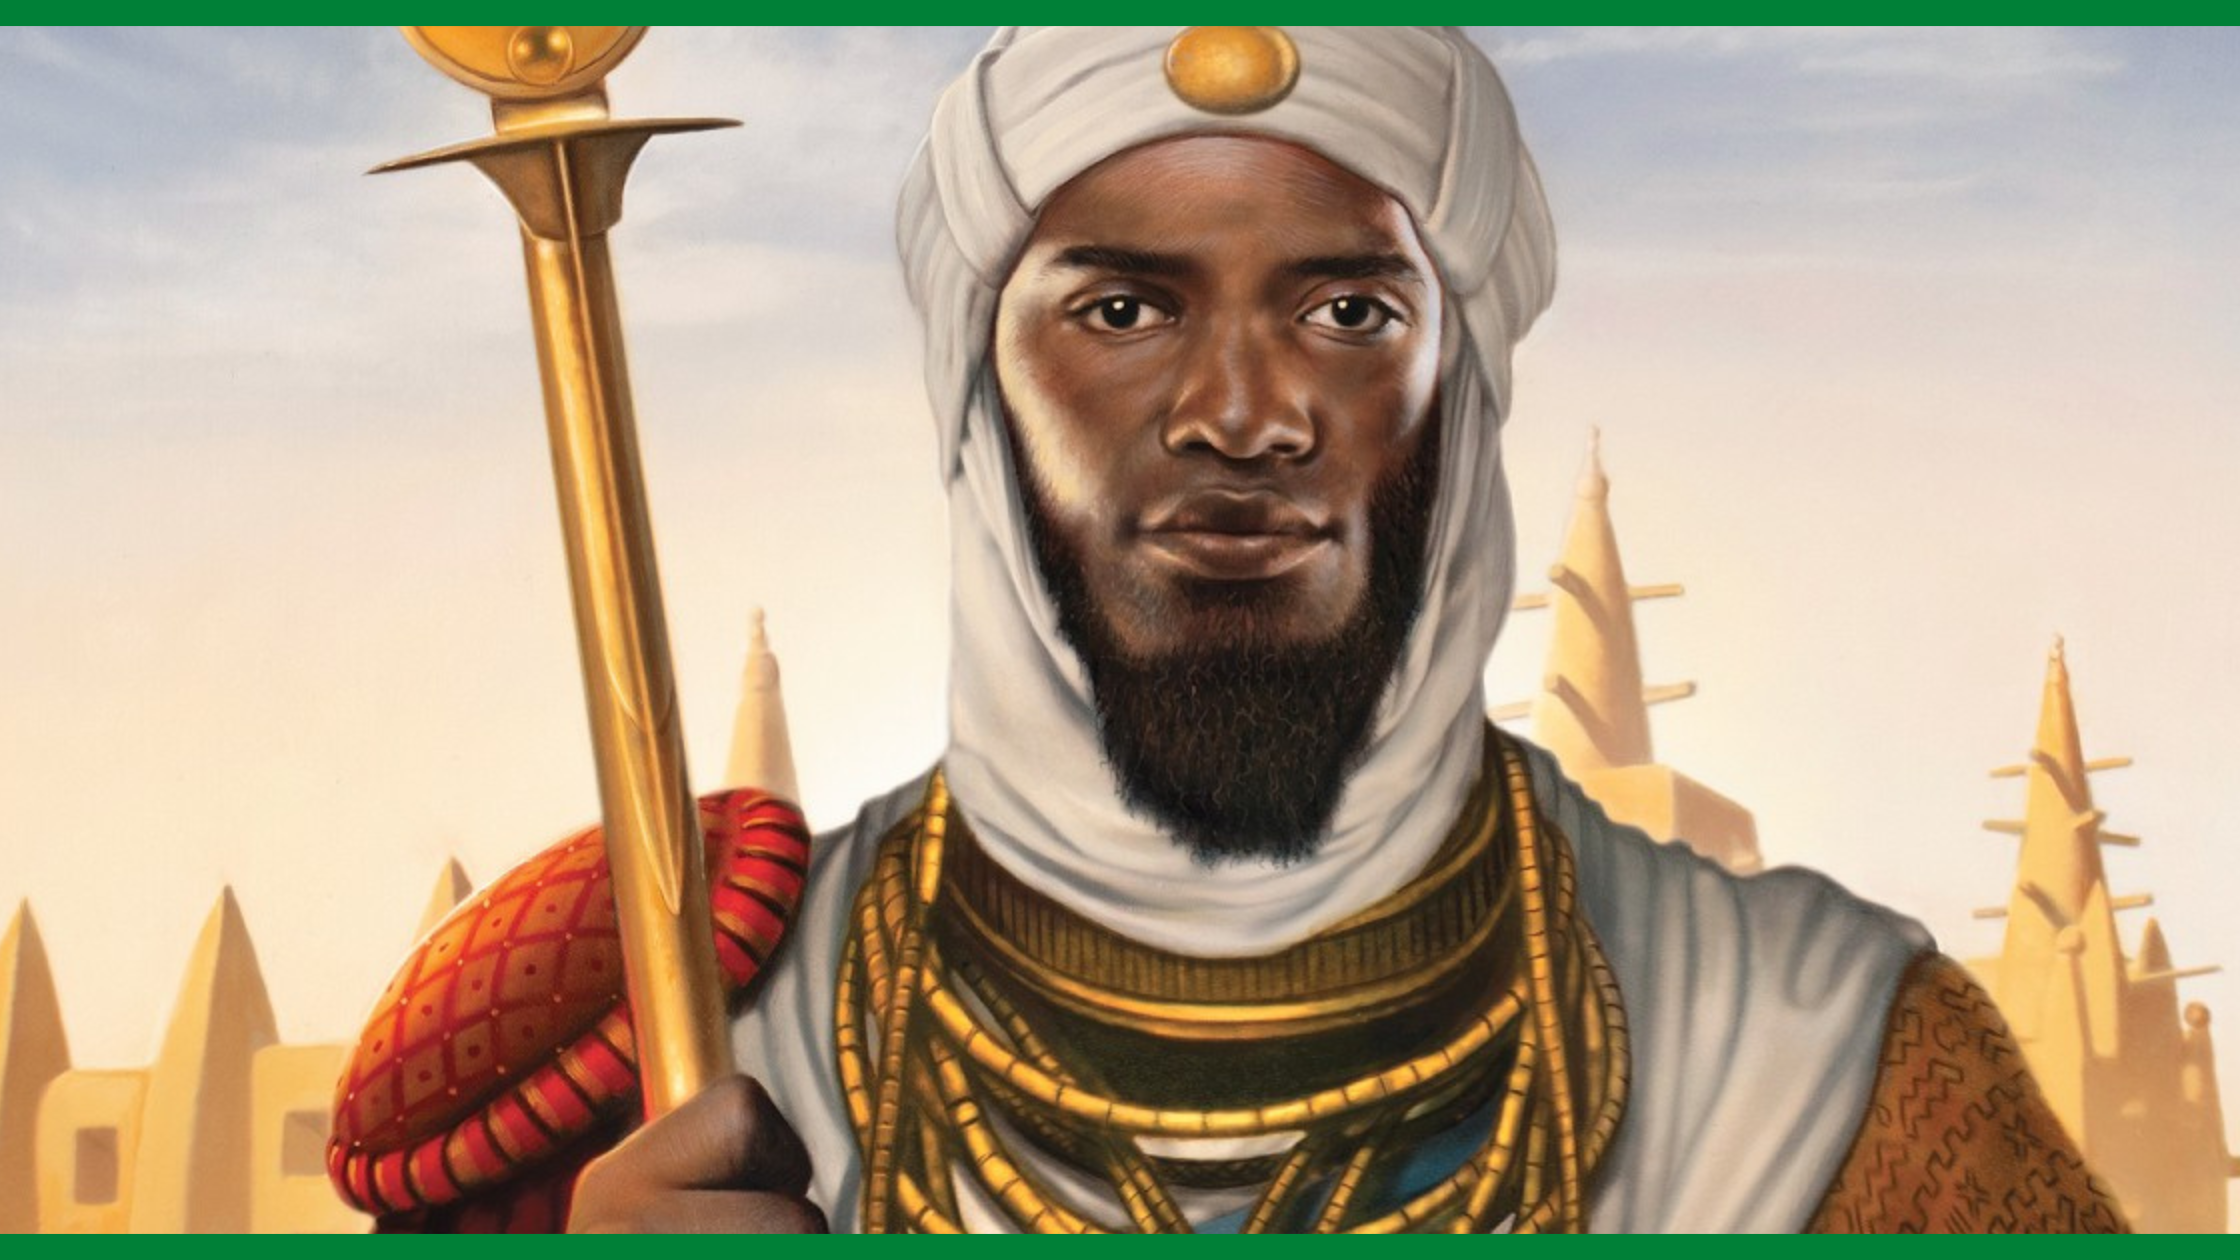 Meet Mansa Musa, The Richest Man In History